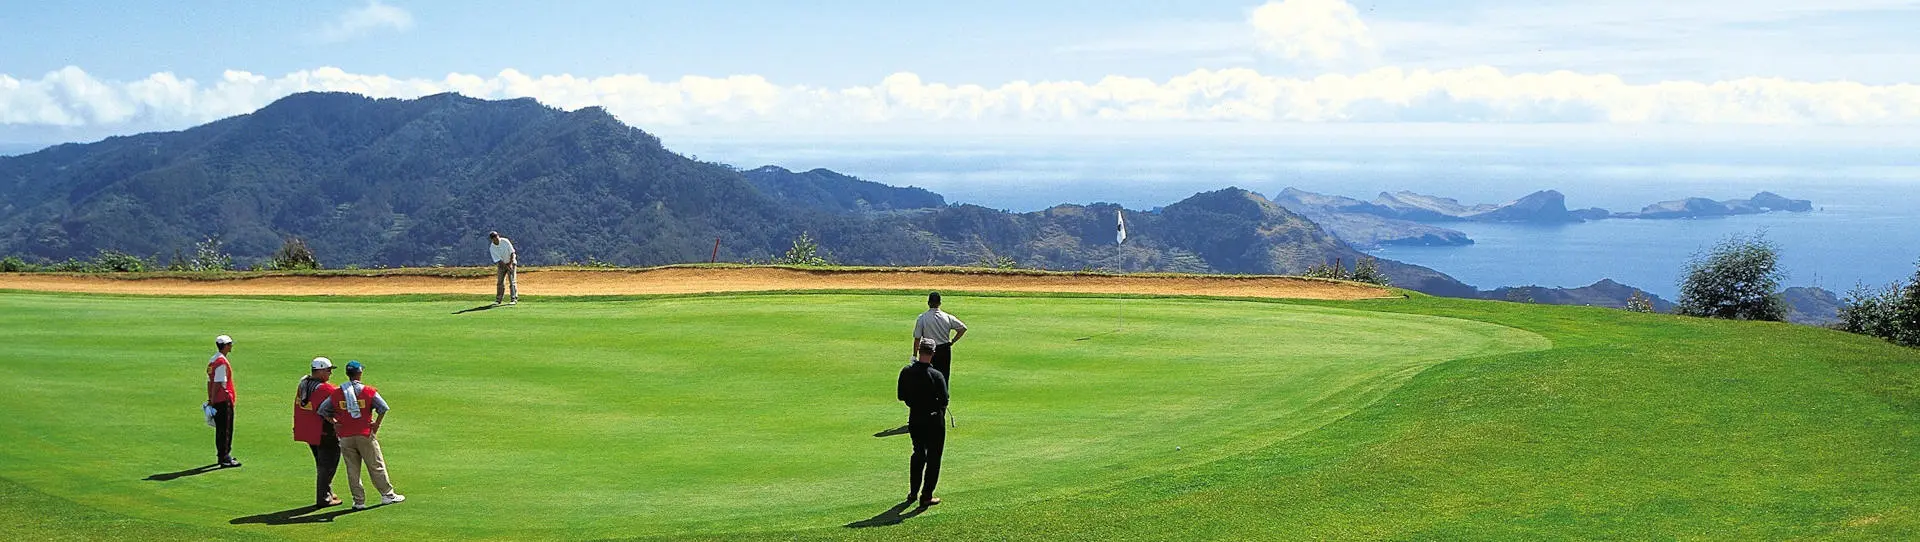 Portugal golf holidays - Santo da Serra Trio Experience w/ Buggy Included - Photo 1